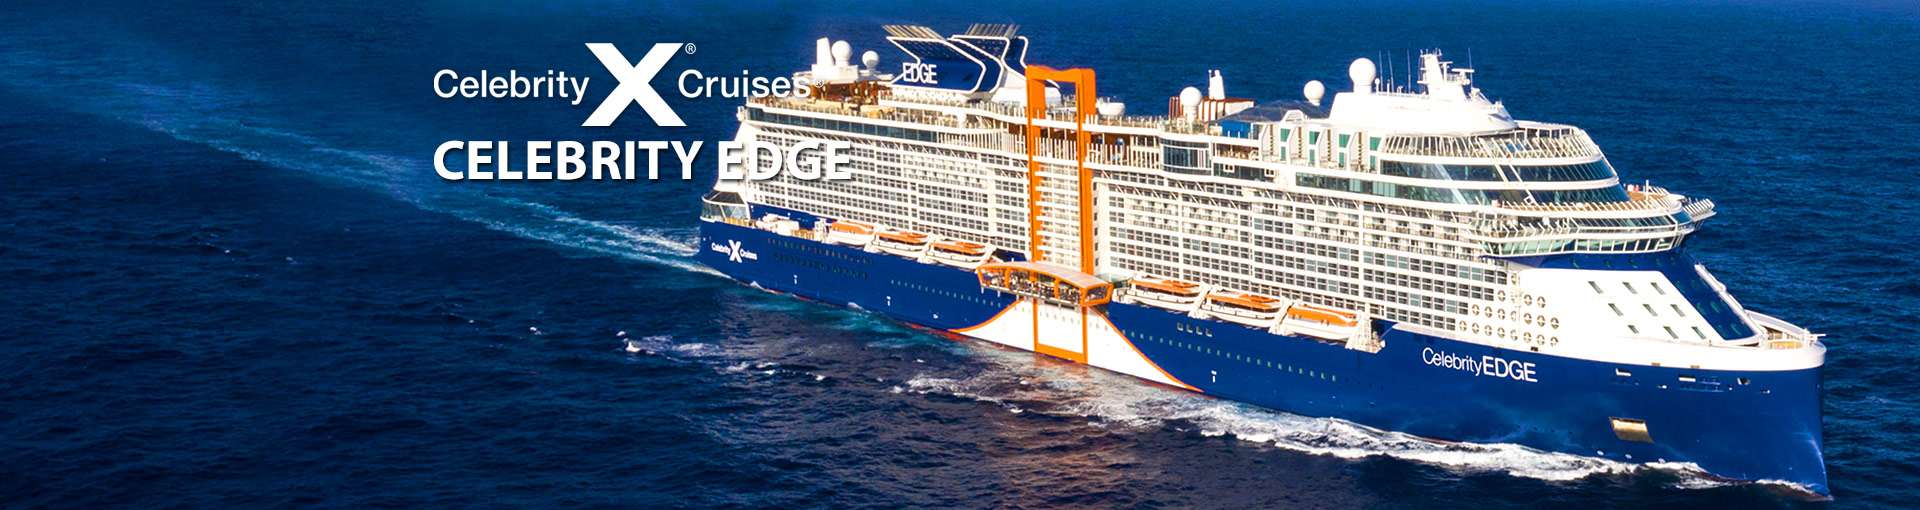 Celebrity Edge Cruise Ship, 2019, 2020 and 2021 Celebrity Edge ship ...